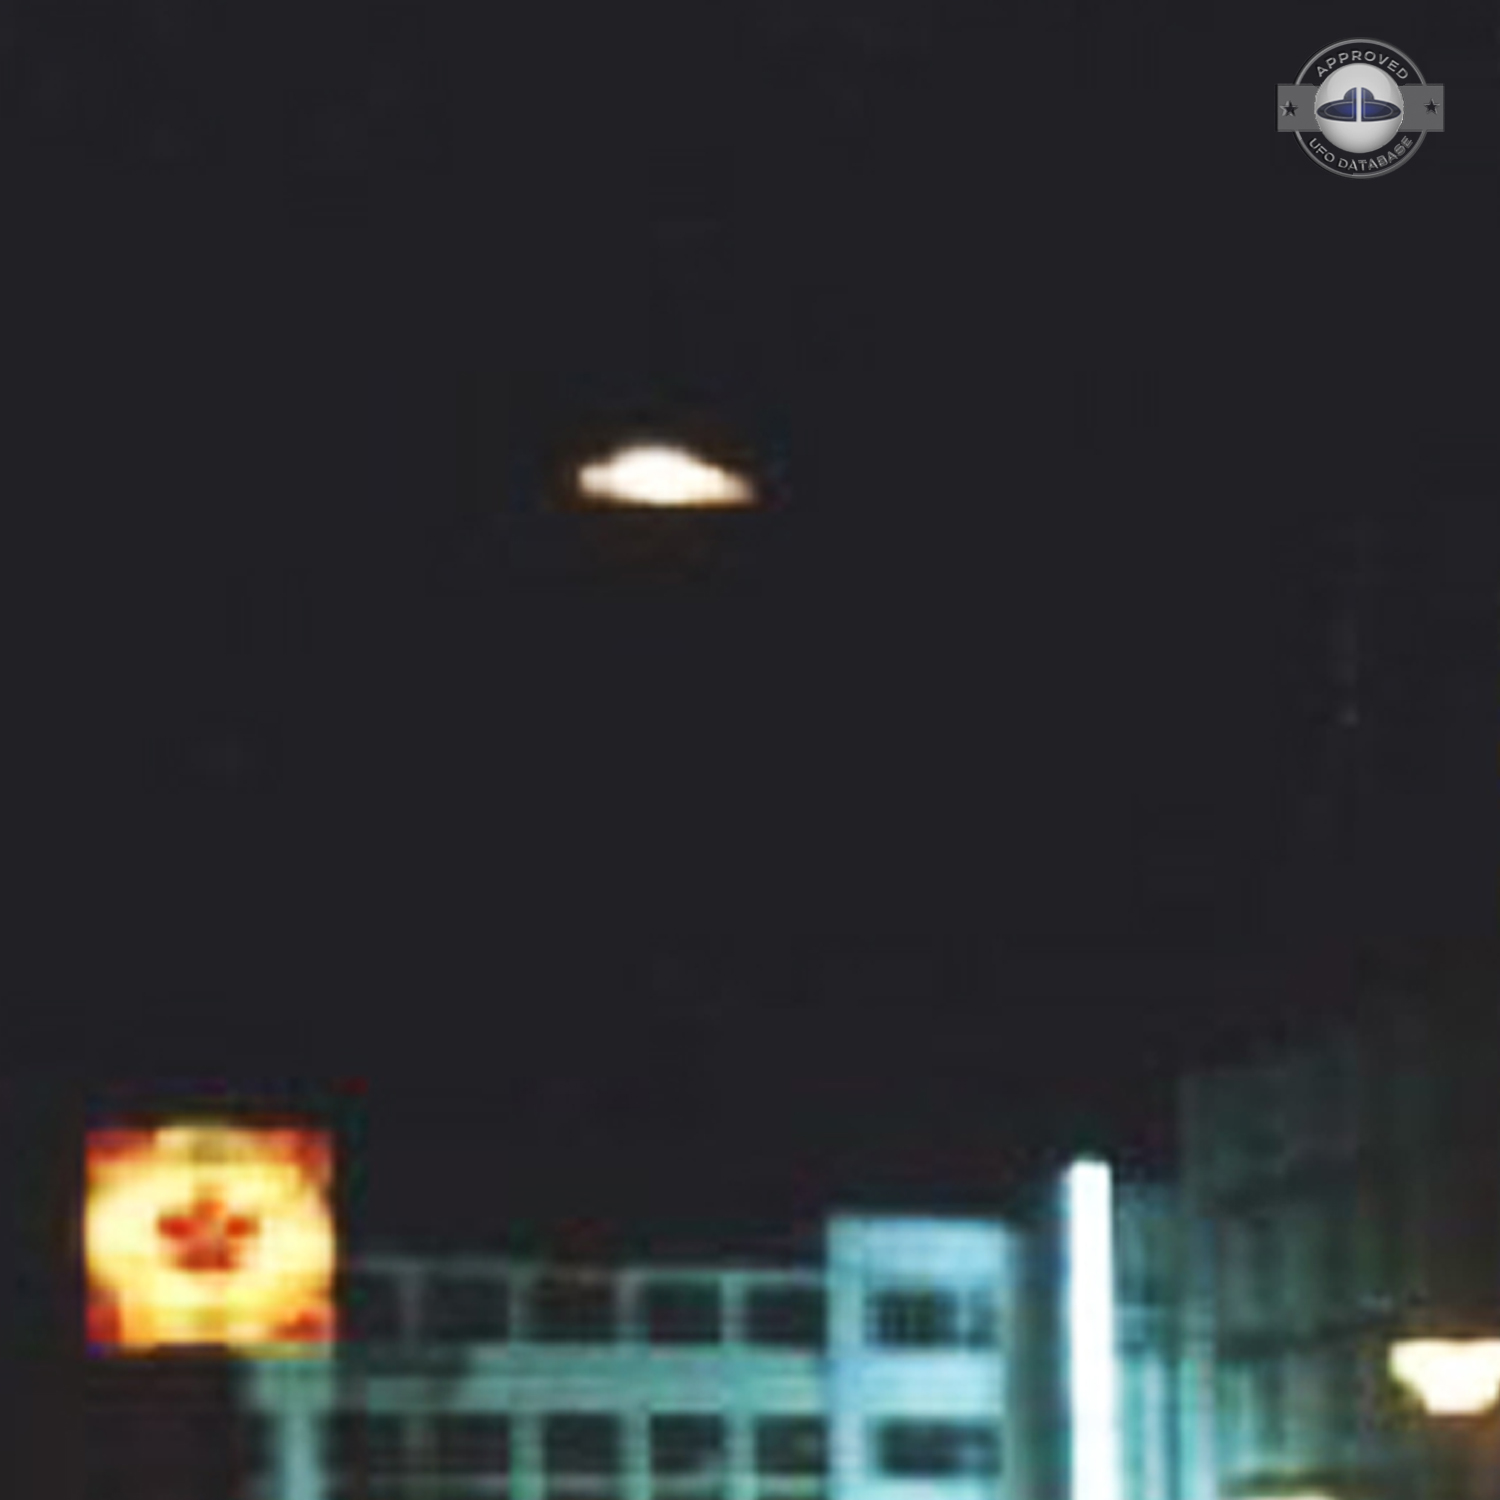 UFO picture taken on Jones Bridge in Manila | Philippines UFO | 2005 UFO Picture #189-4